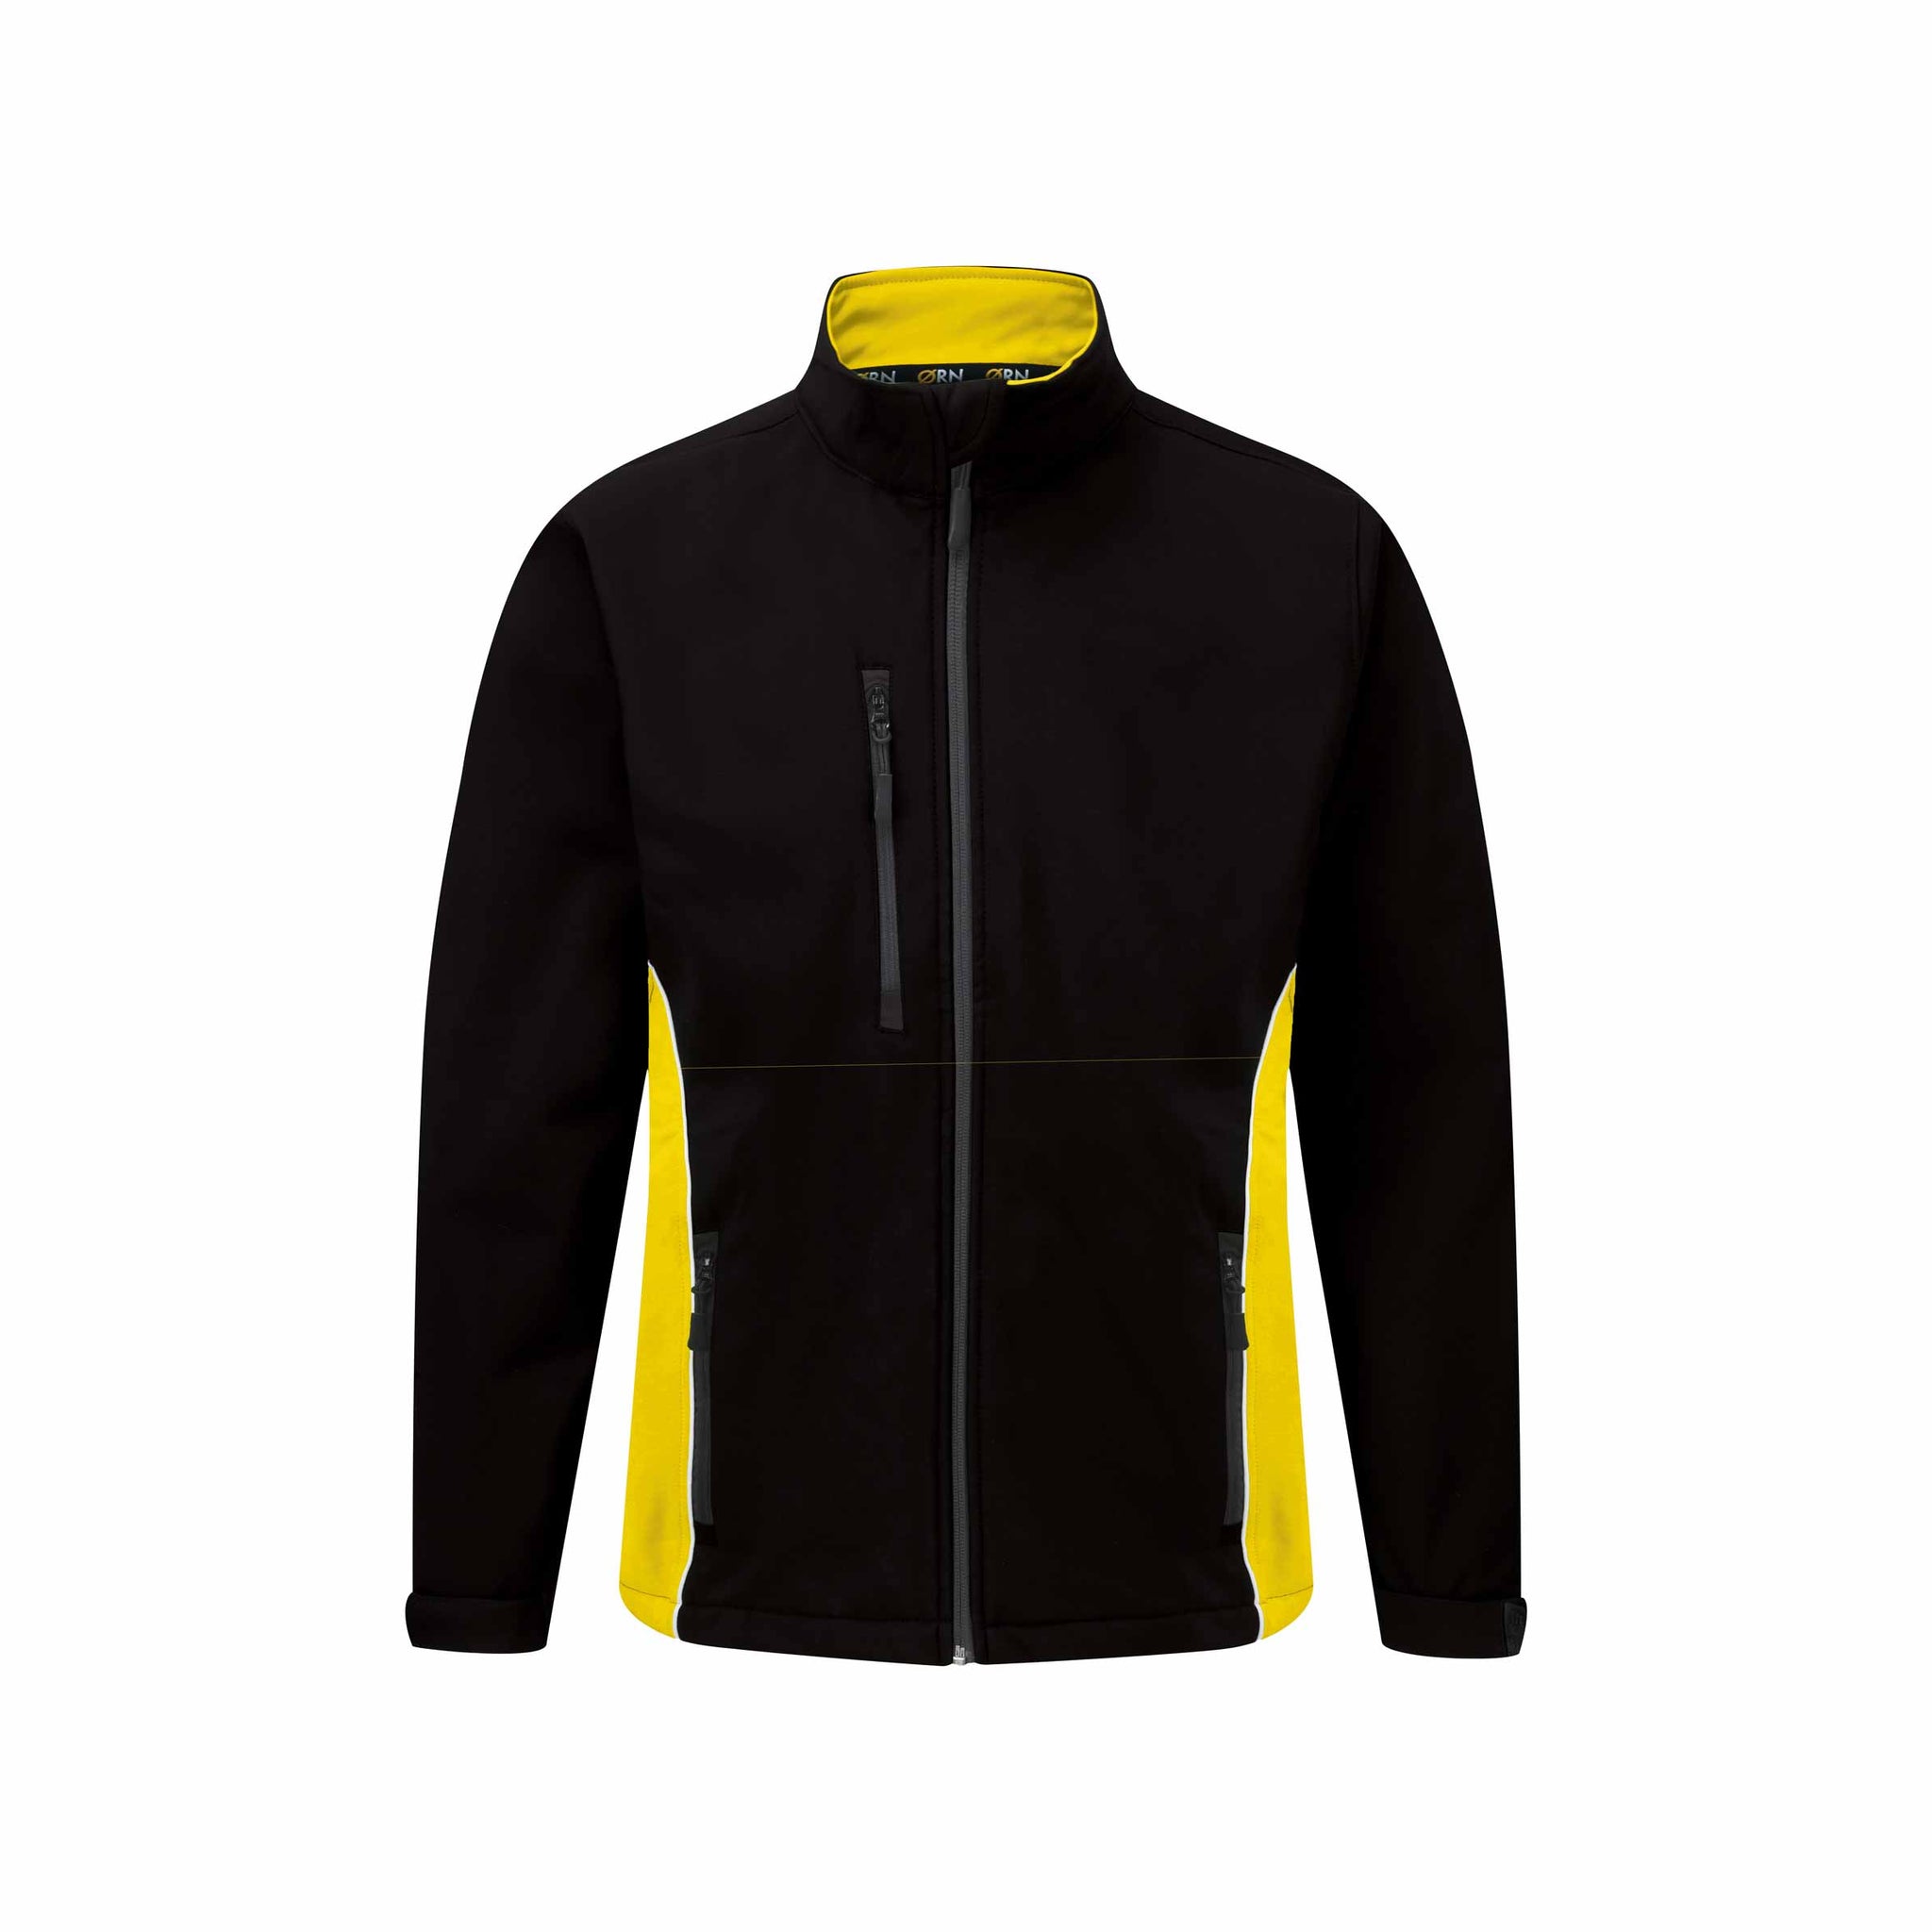 Silverswift - Softshell Jacke XS-5XL / 92% Polyester - 8% Elastan/ 10 Farben